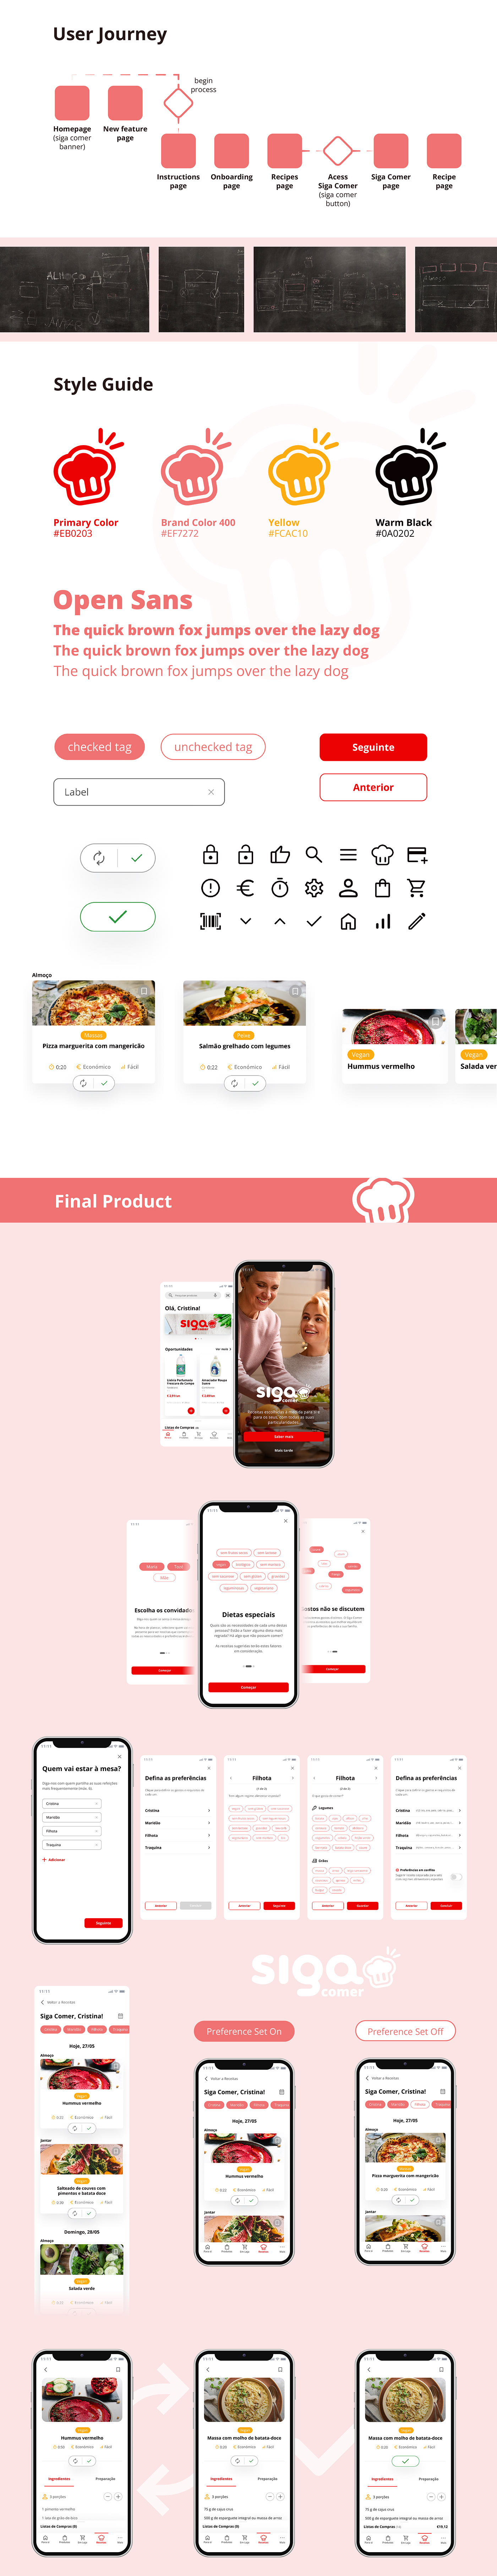 Case Study Continente Figma Meal Planner Mobile app Sonae ui design UX design UX UI Web Design 